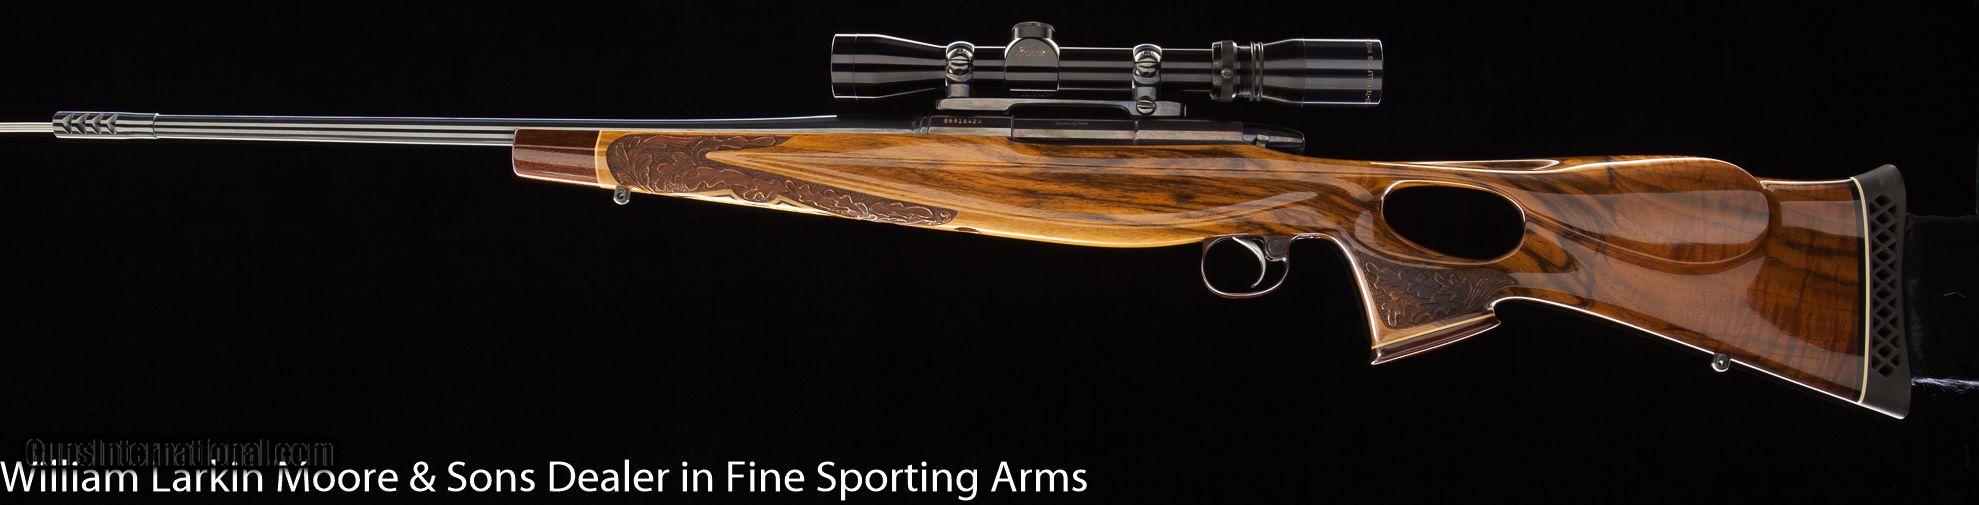 HARRY LAWSON Cochise thumbhole Custom rifle on Rem 700 action 7mm rem ...